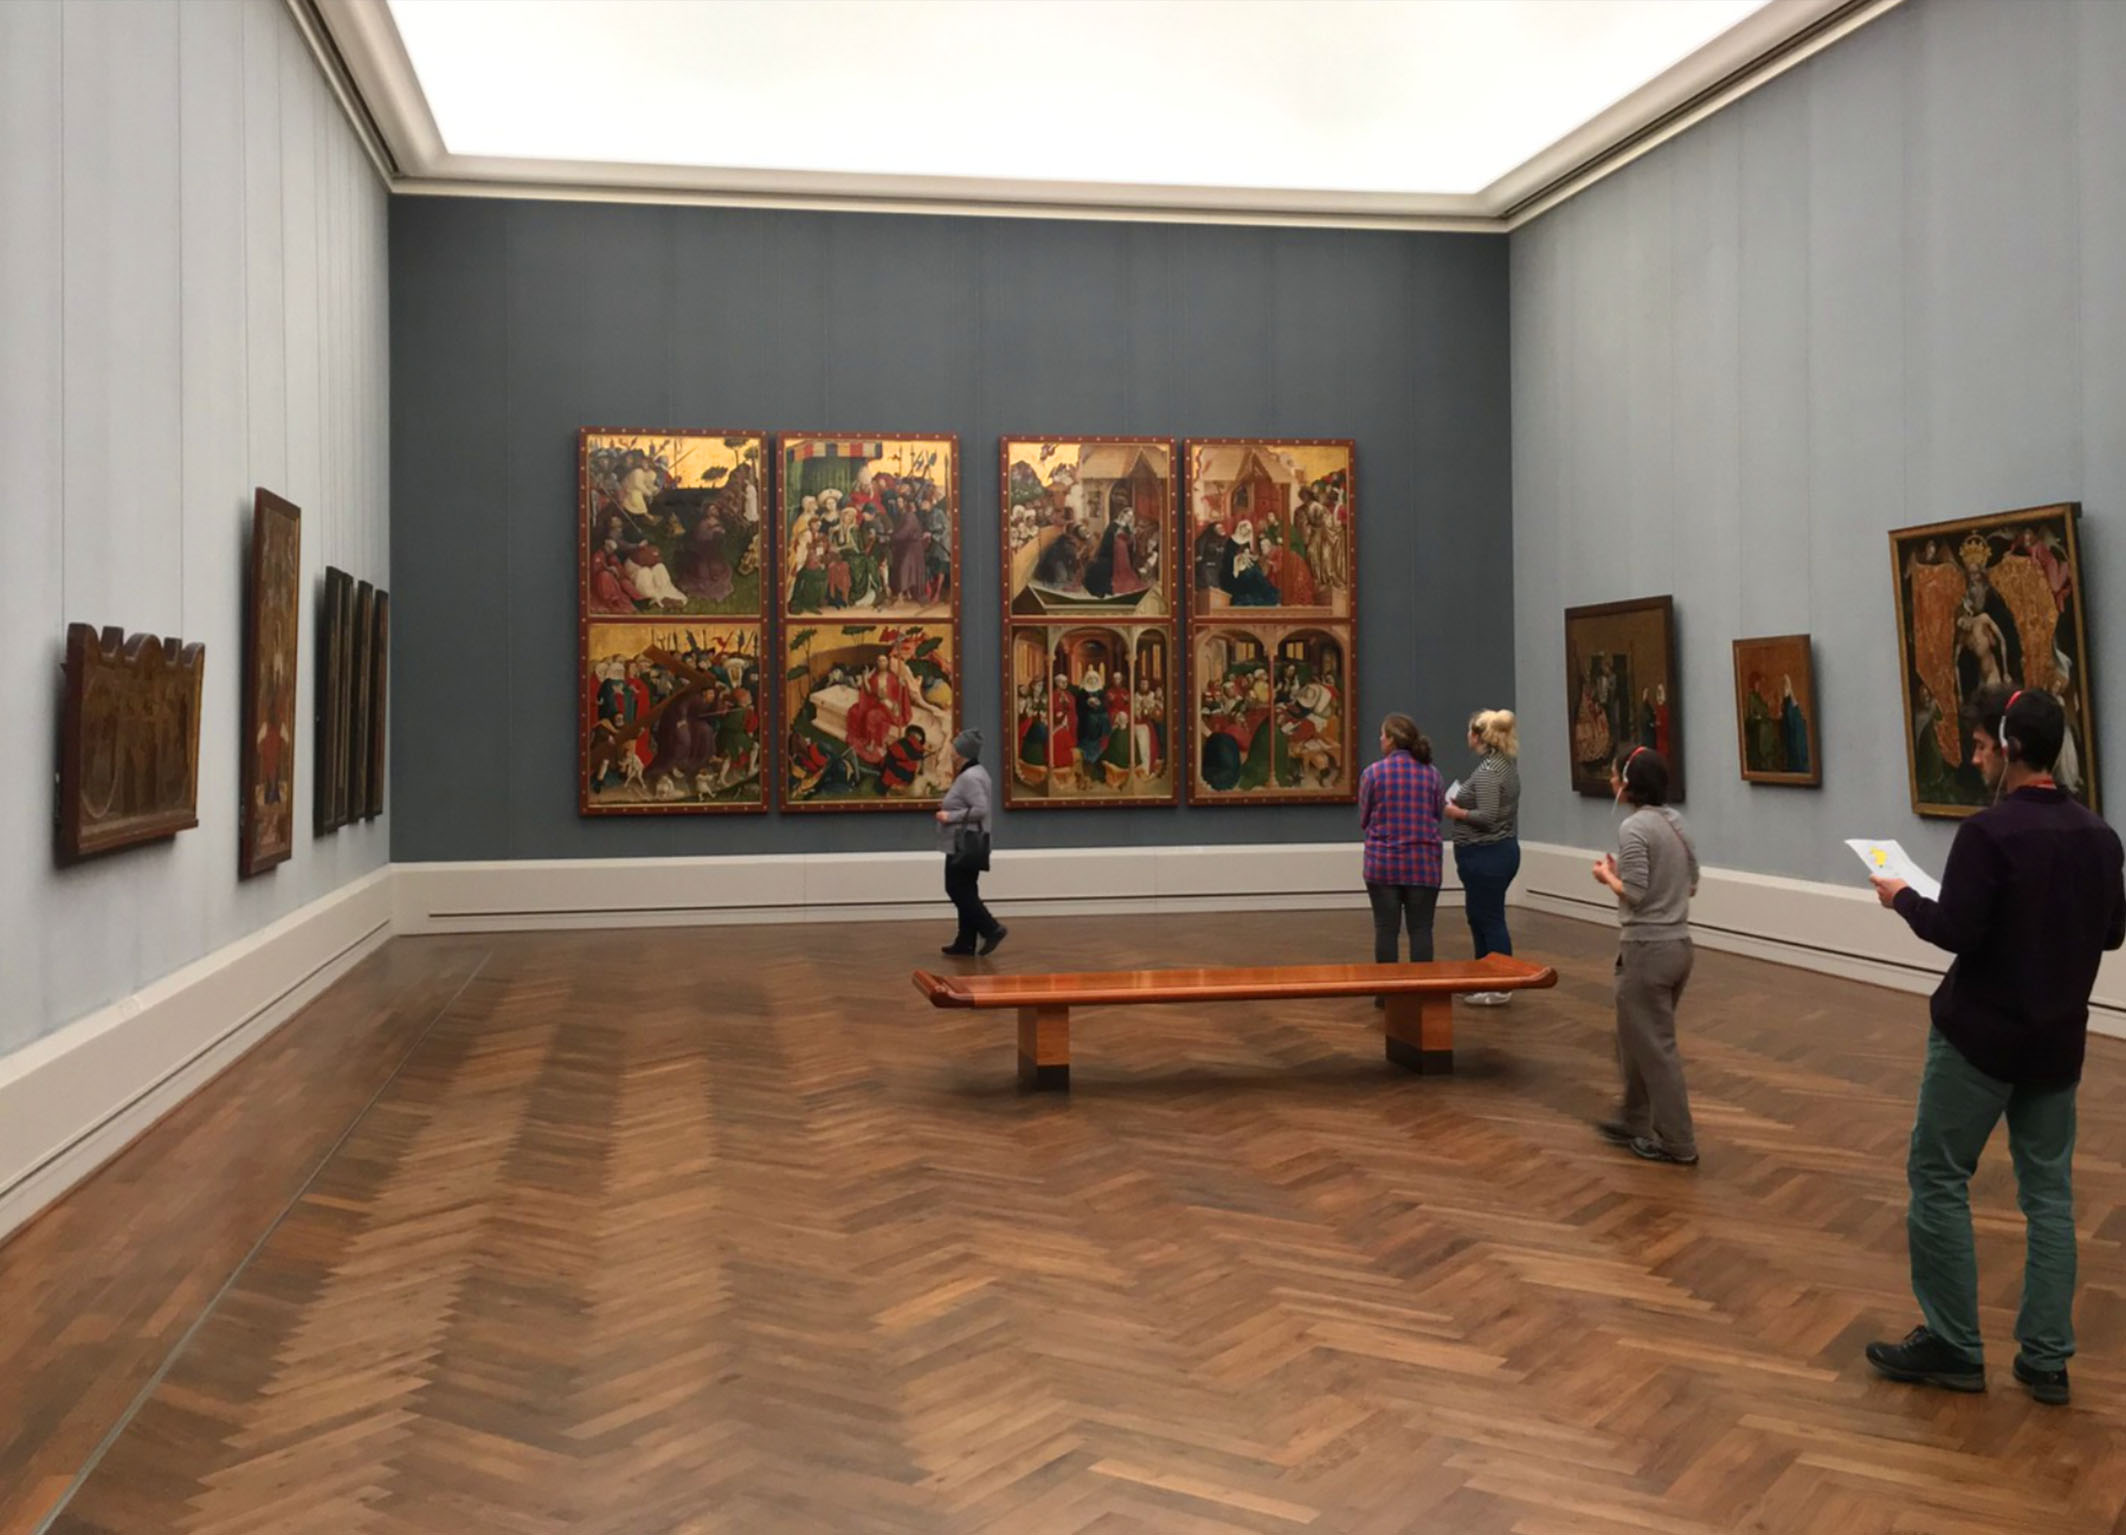  Salle du Gemäldegalerie